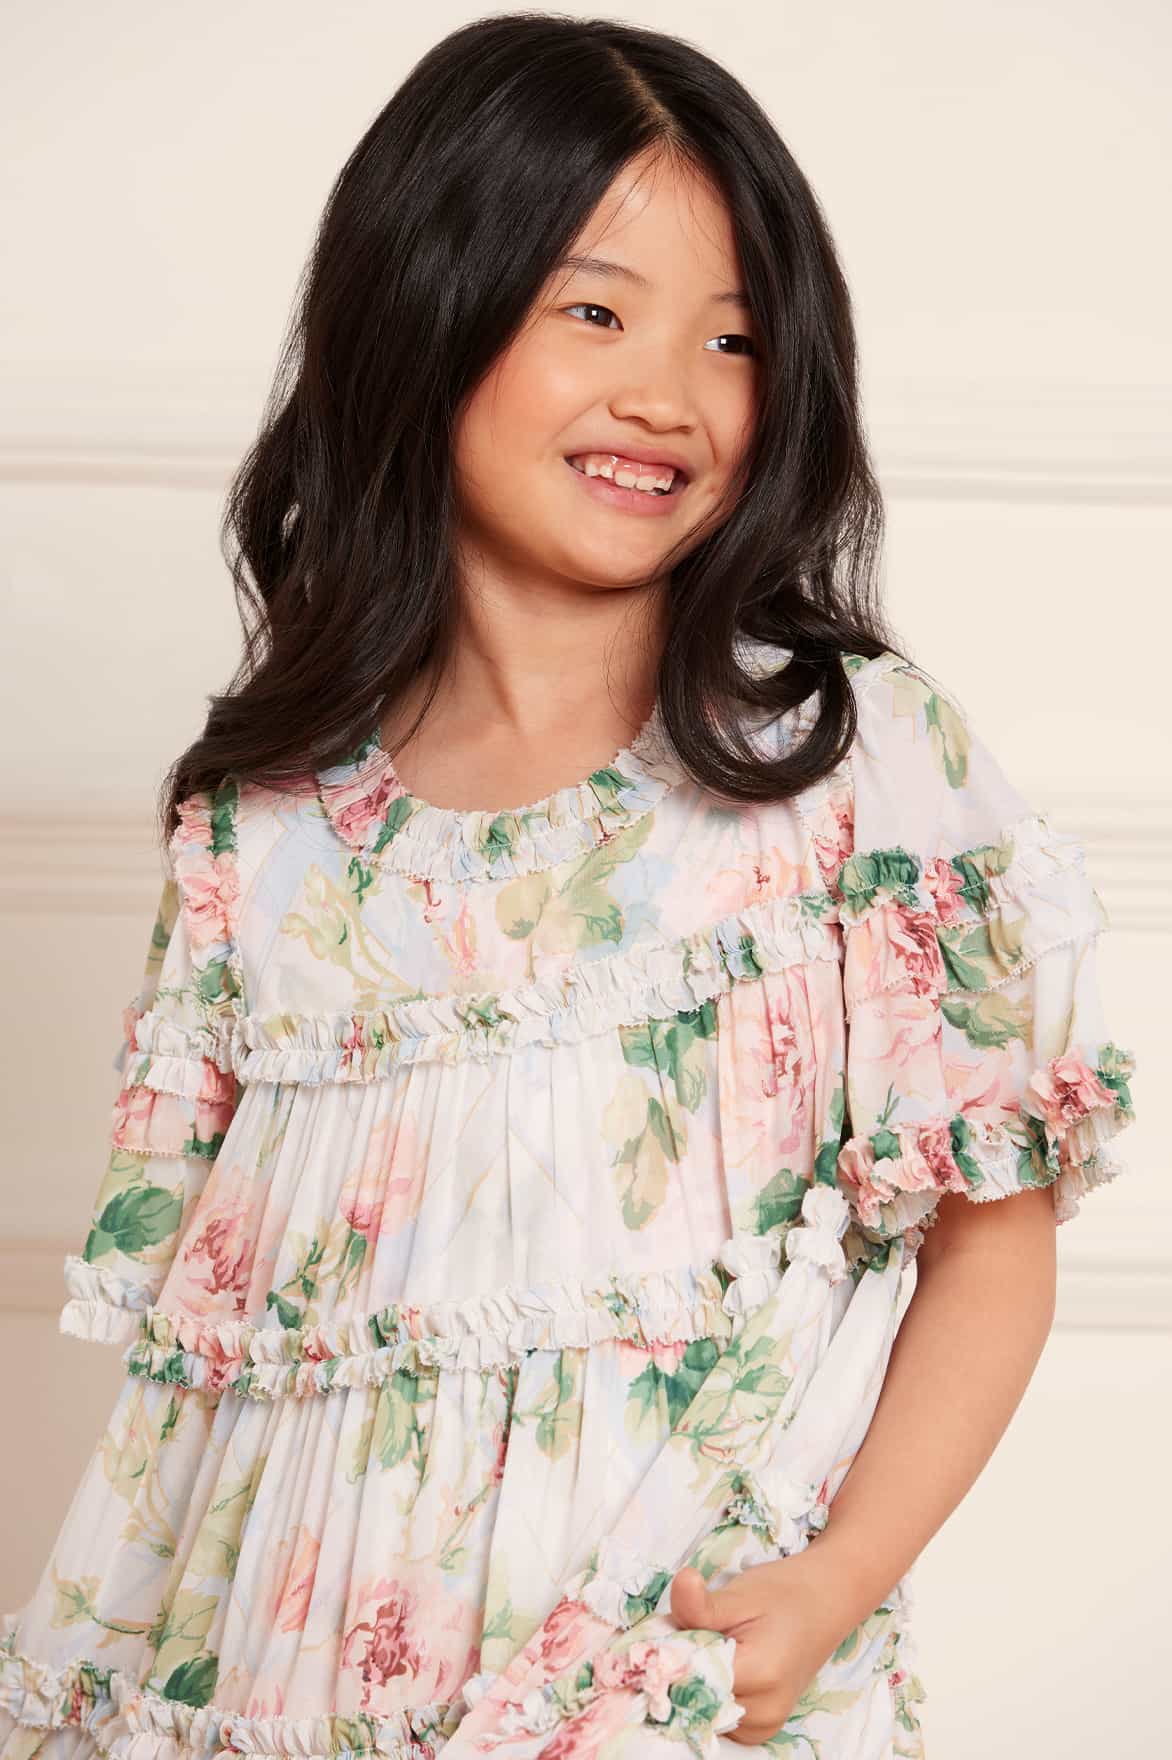 Harlequin Rose Chiffon Kids Dress – Multi | Needle & Thread